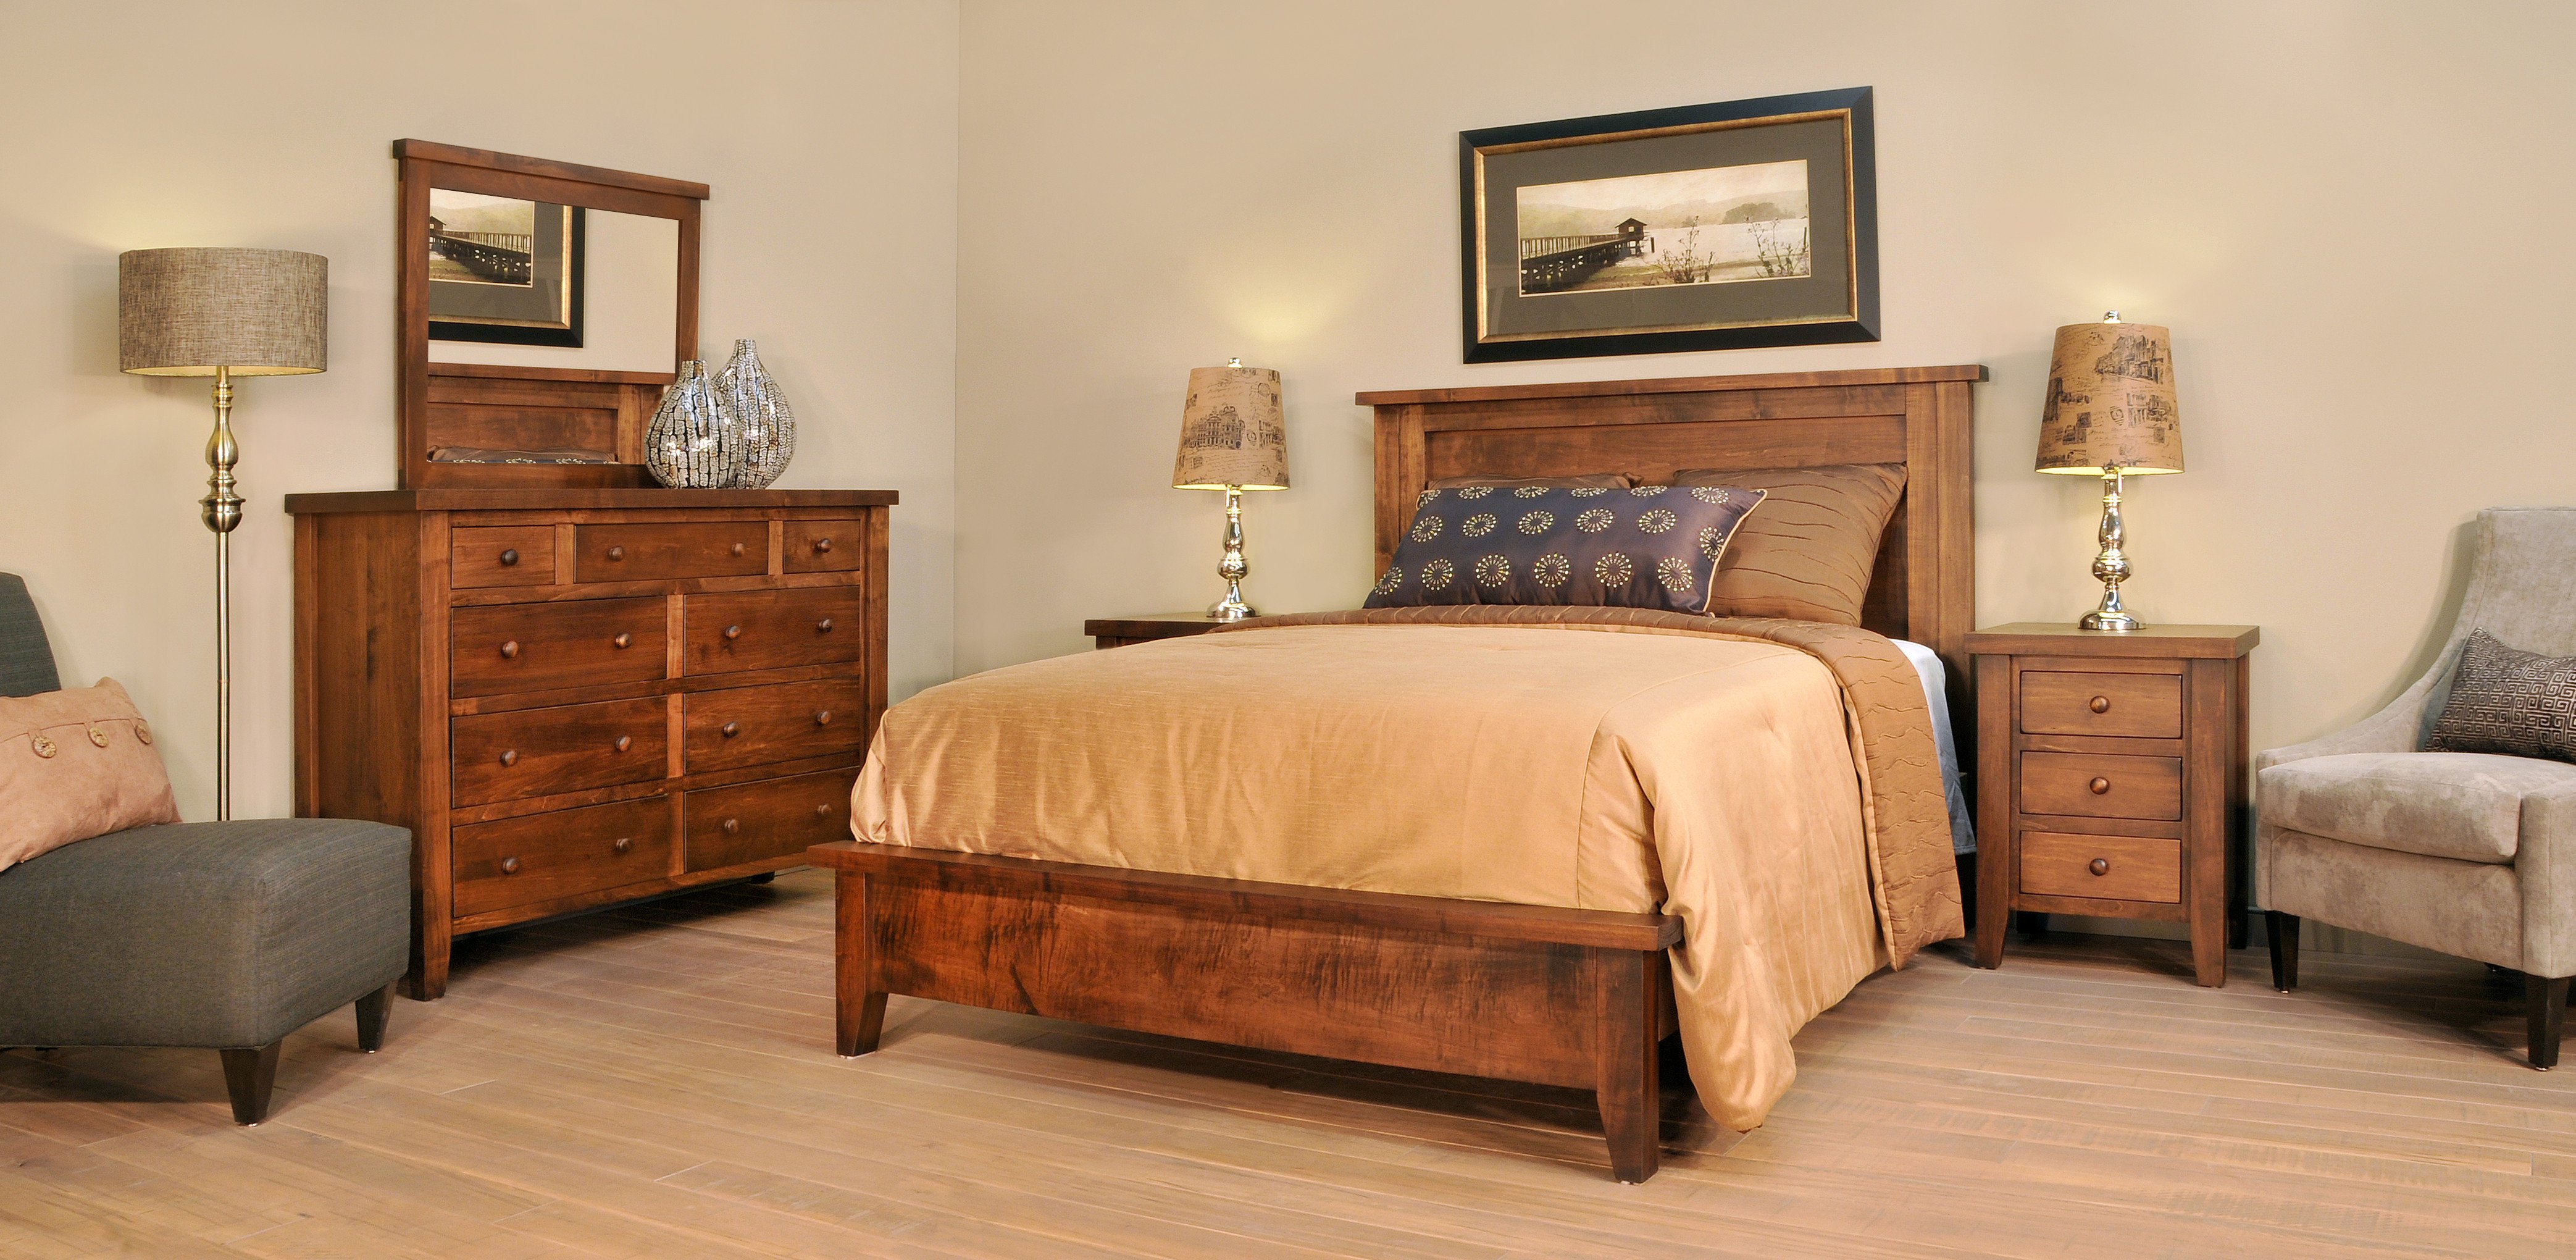 wooden bedroom furniture set